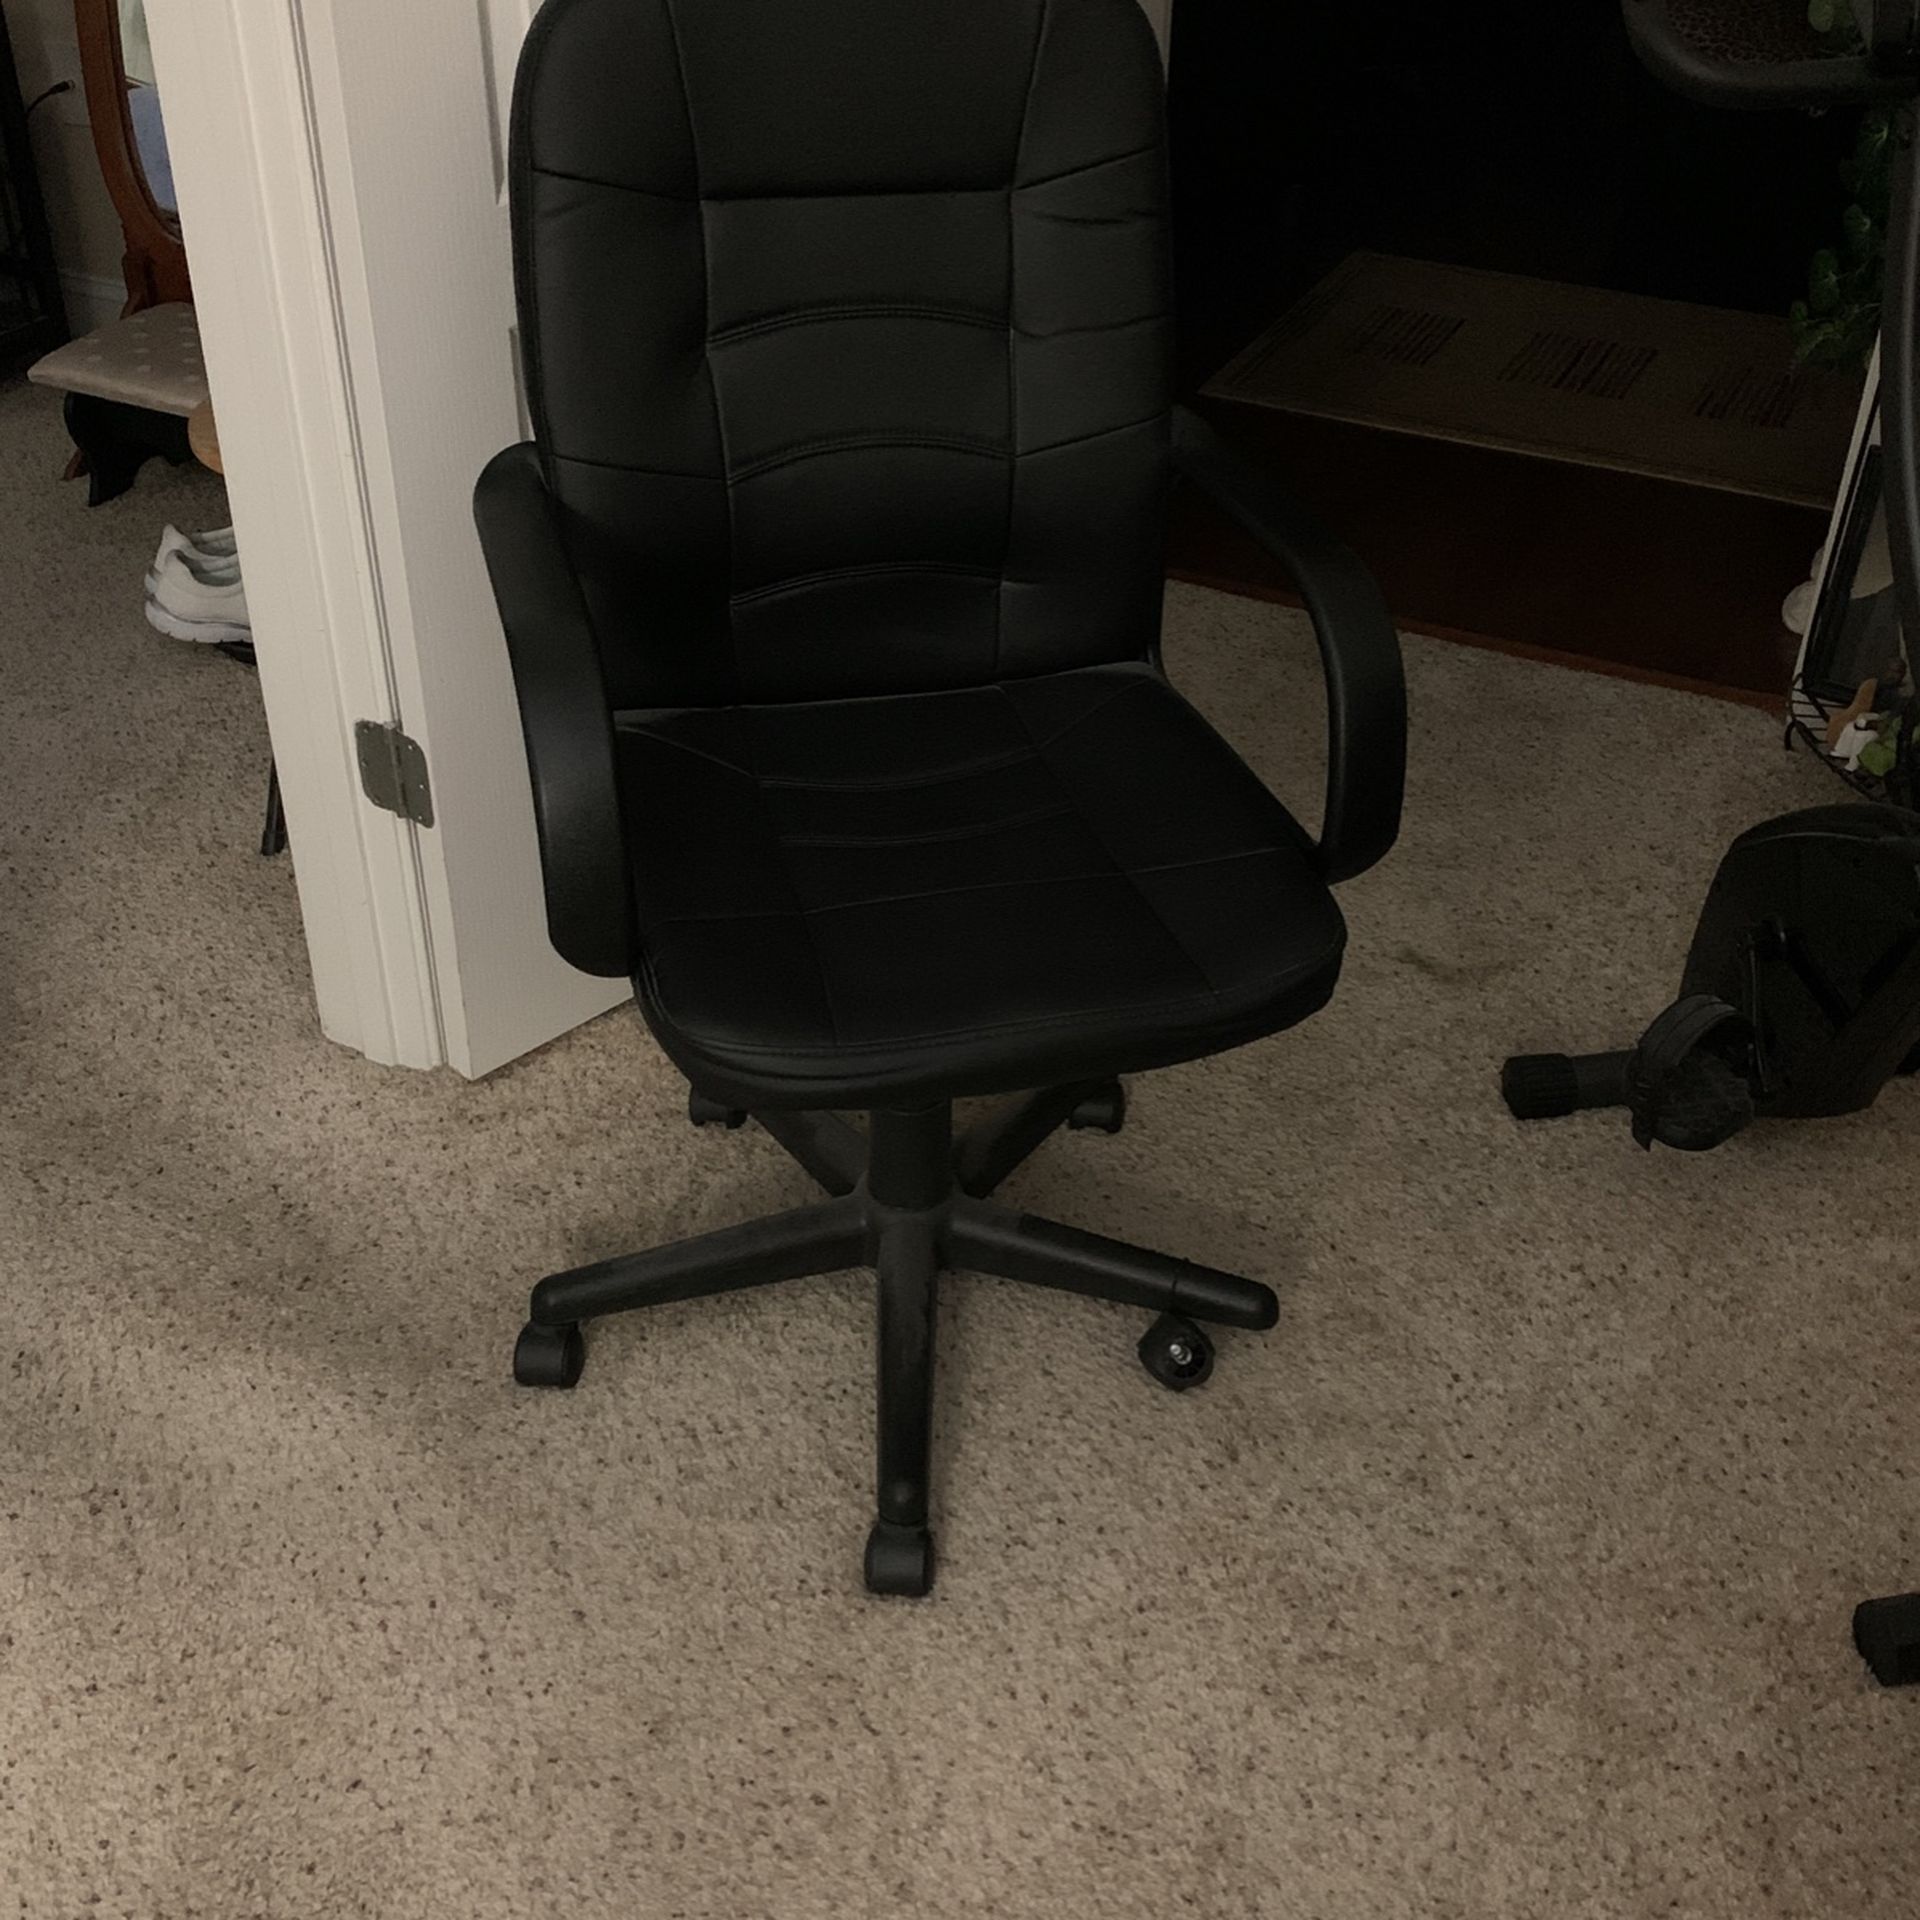 Free Black Desk Chair  with a broken wheel